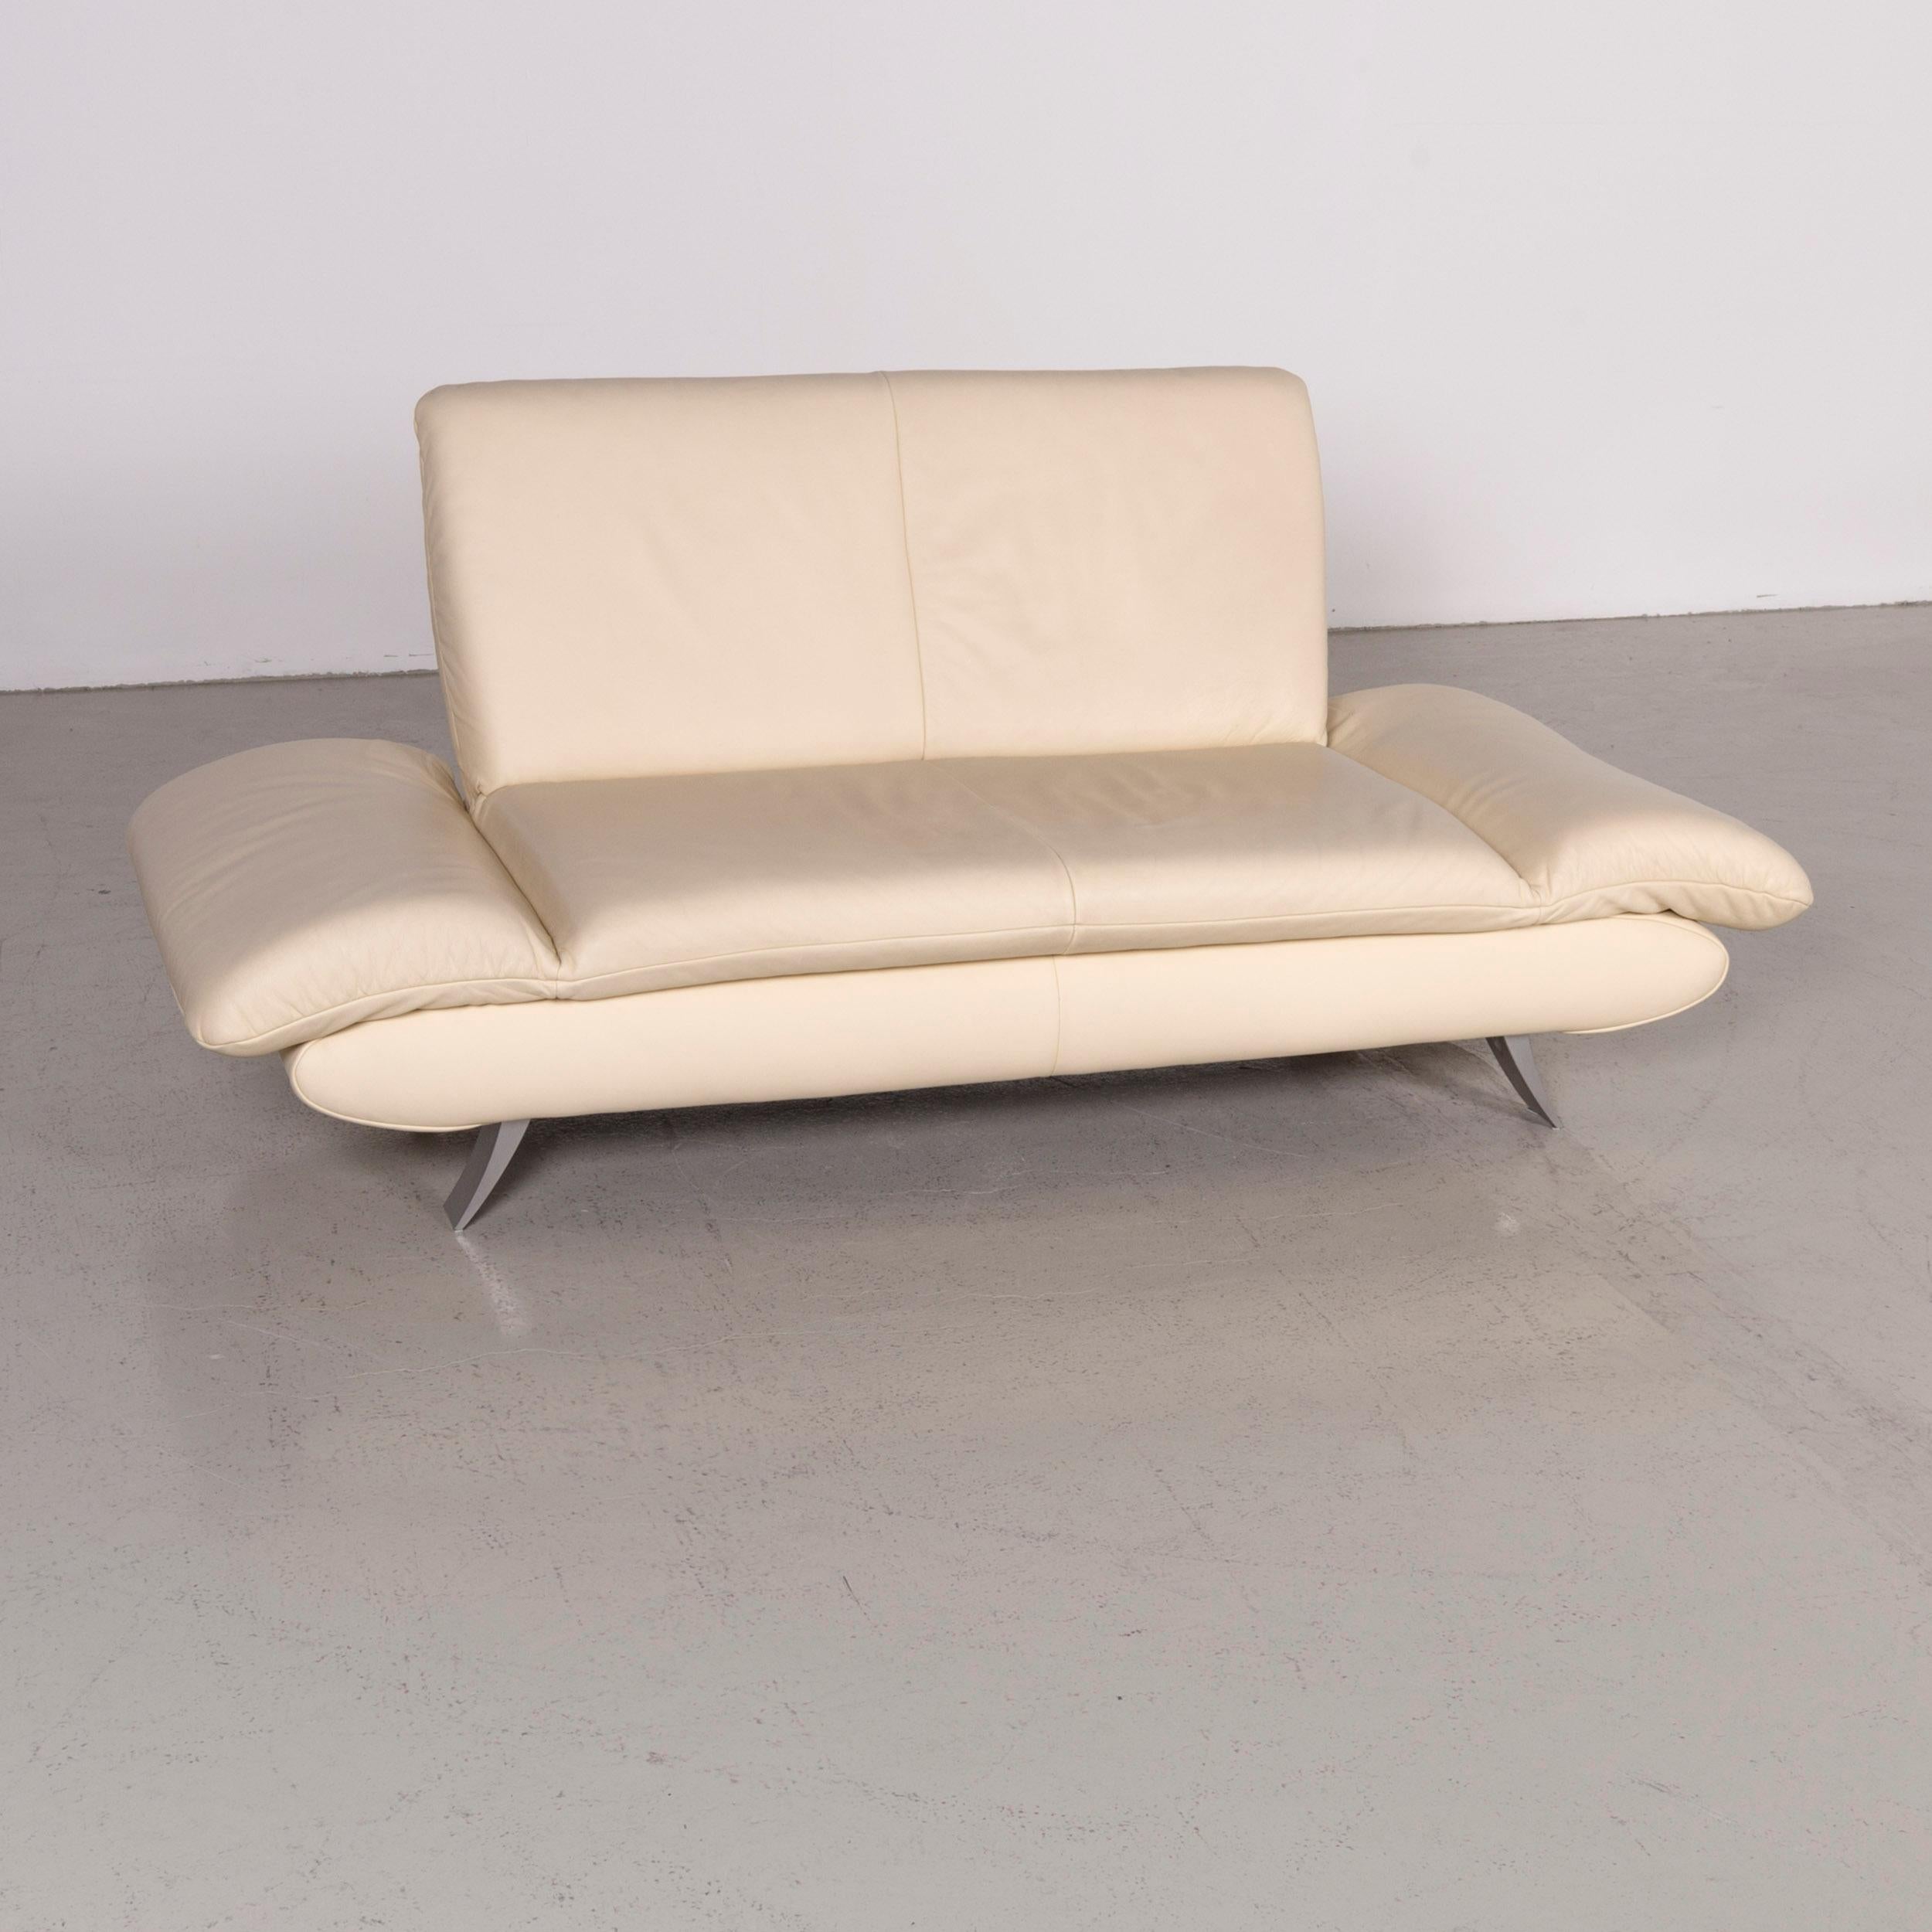 Koinor Rossini designer leather sofa creme two-seat couch.